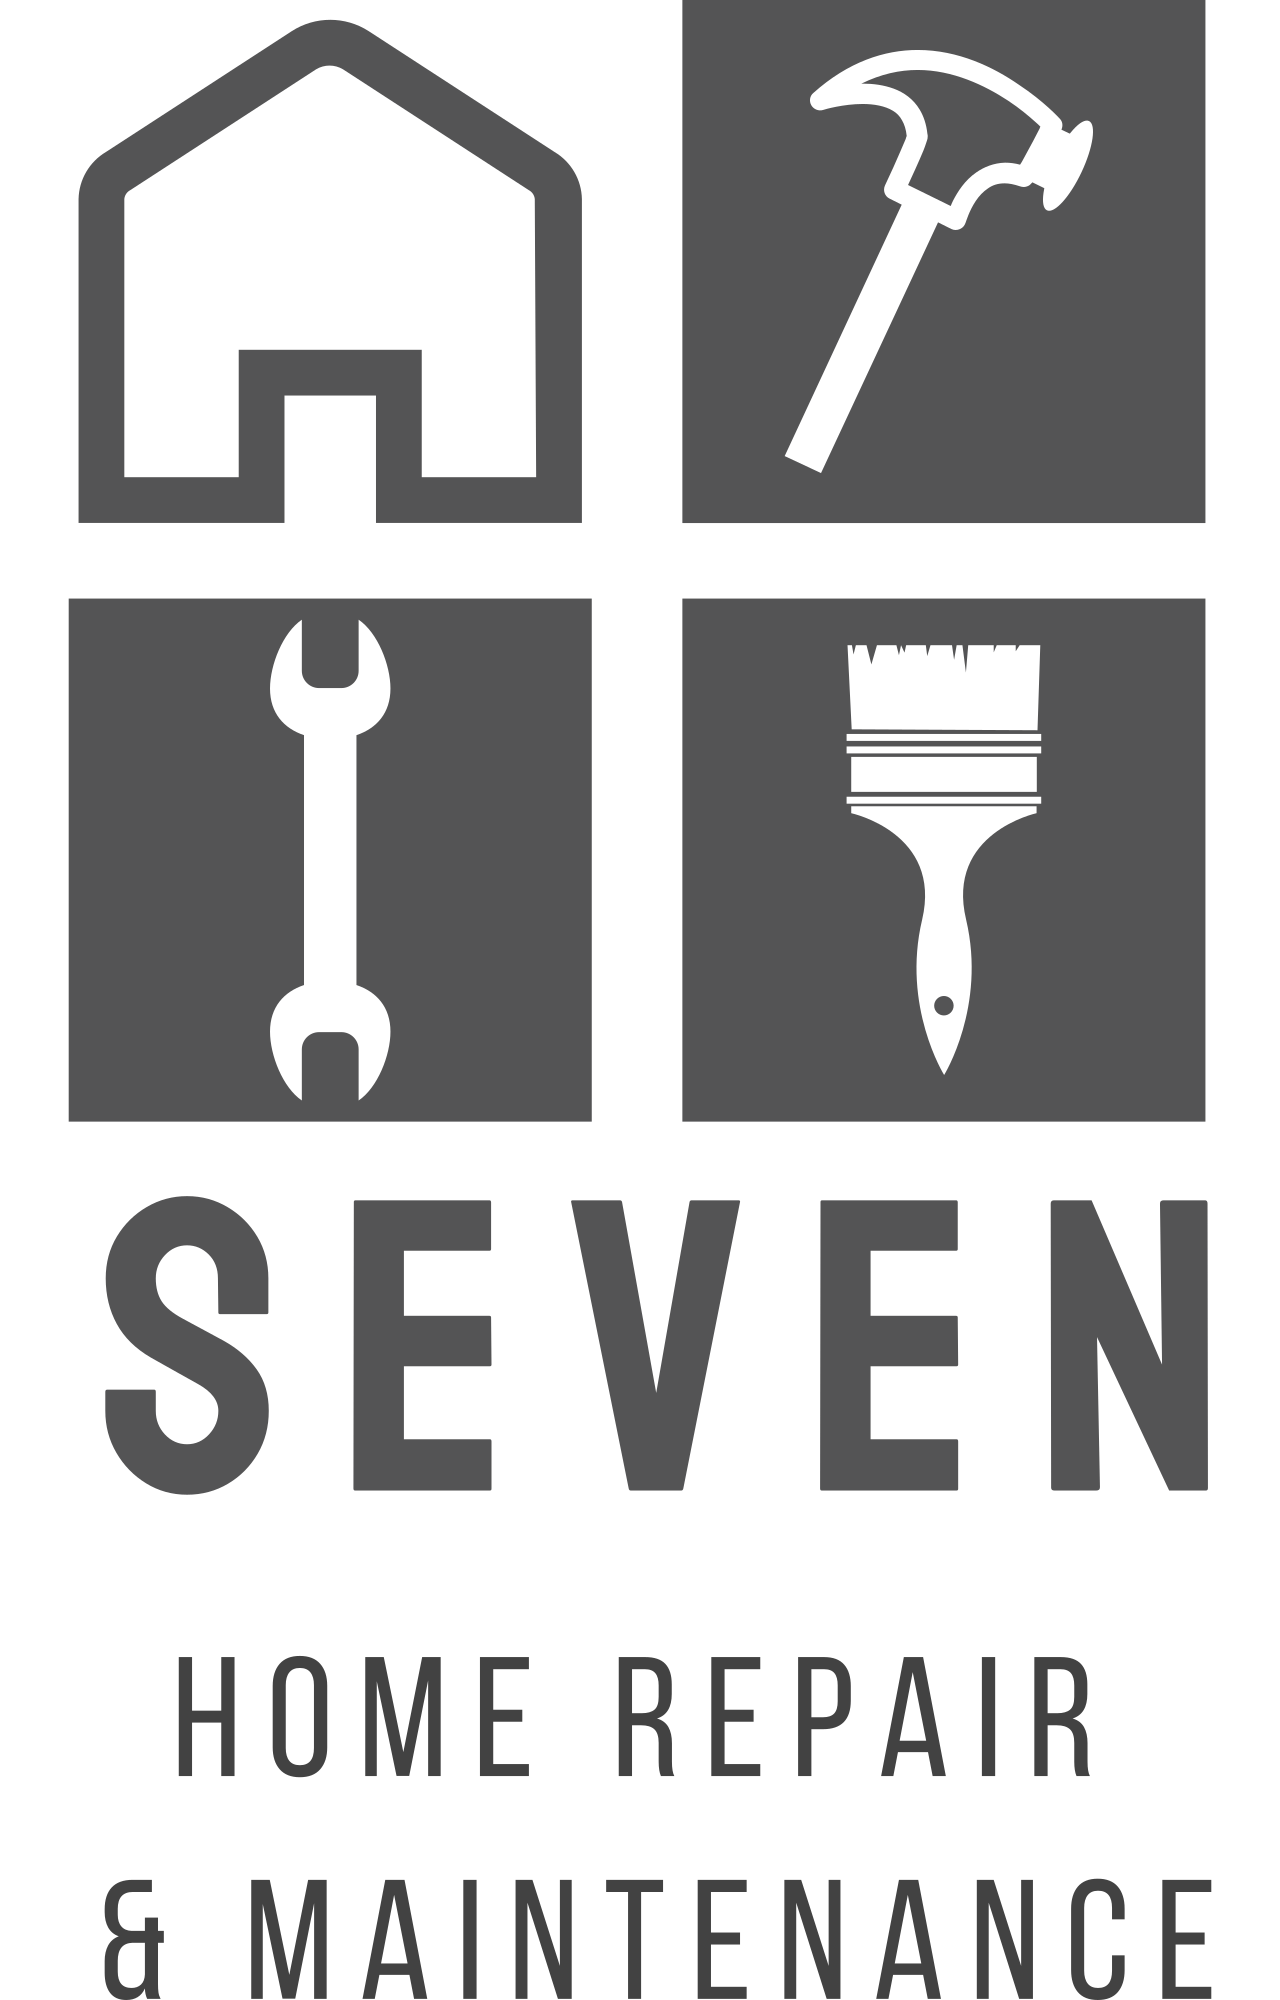 seven's web page